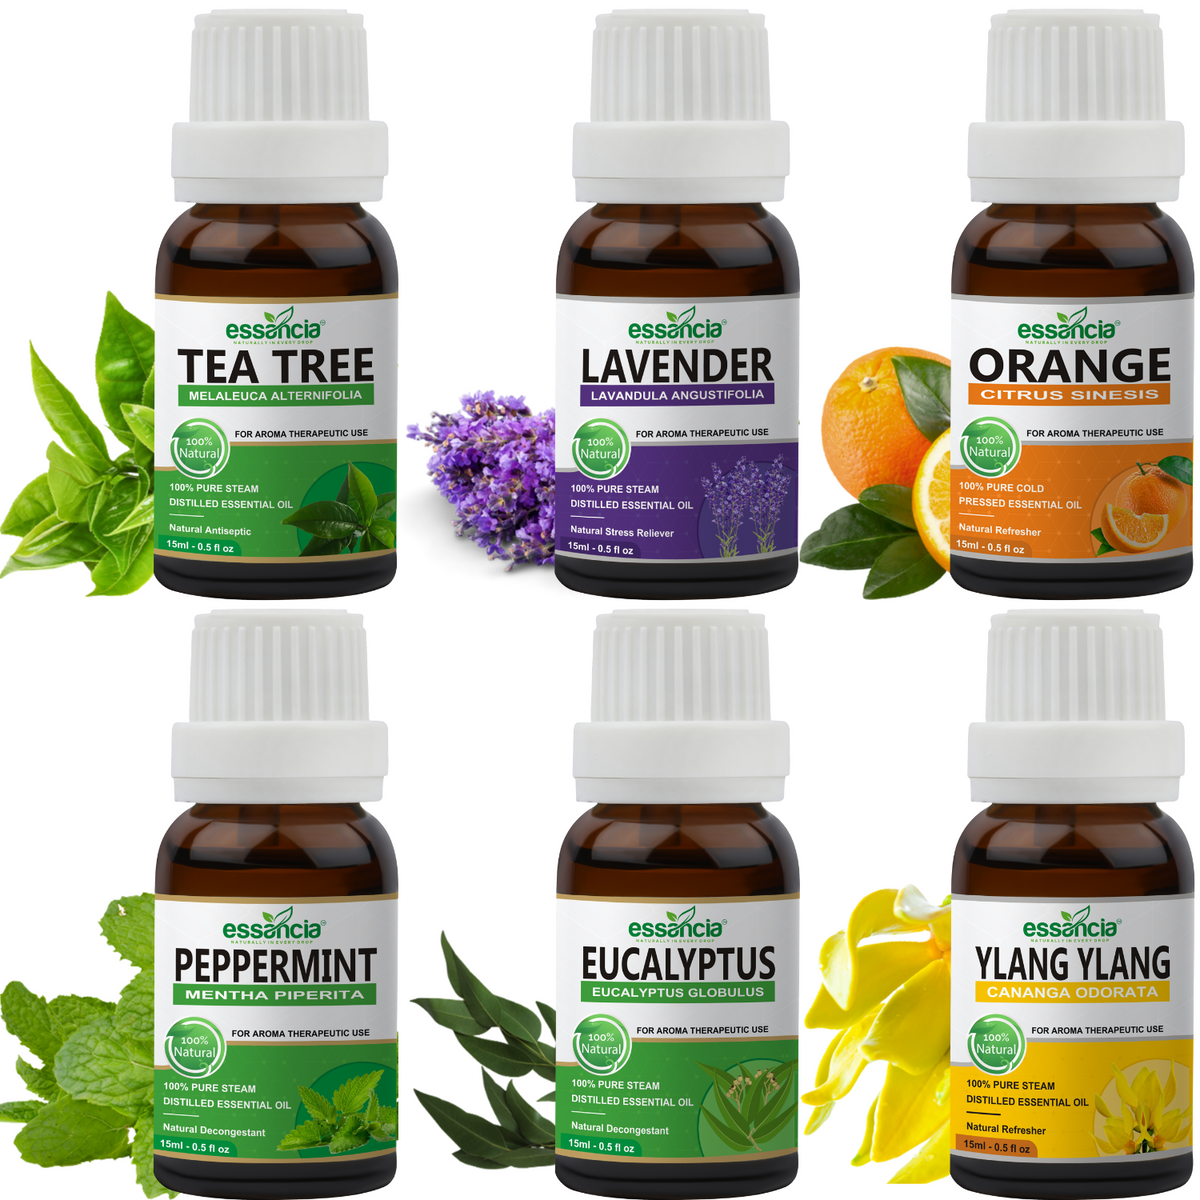 Essential Oil 6-pack - Eucalyptus, Lavender, Lemon, Orange